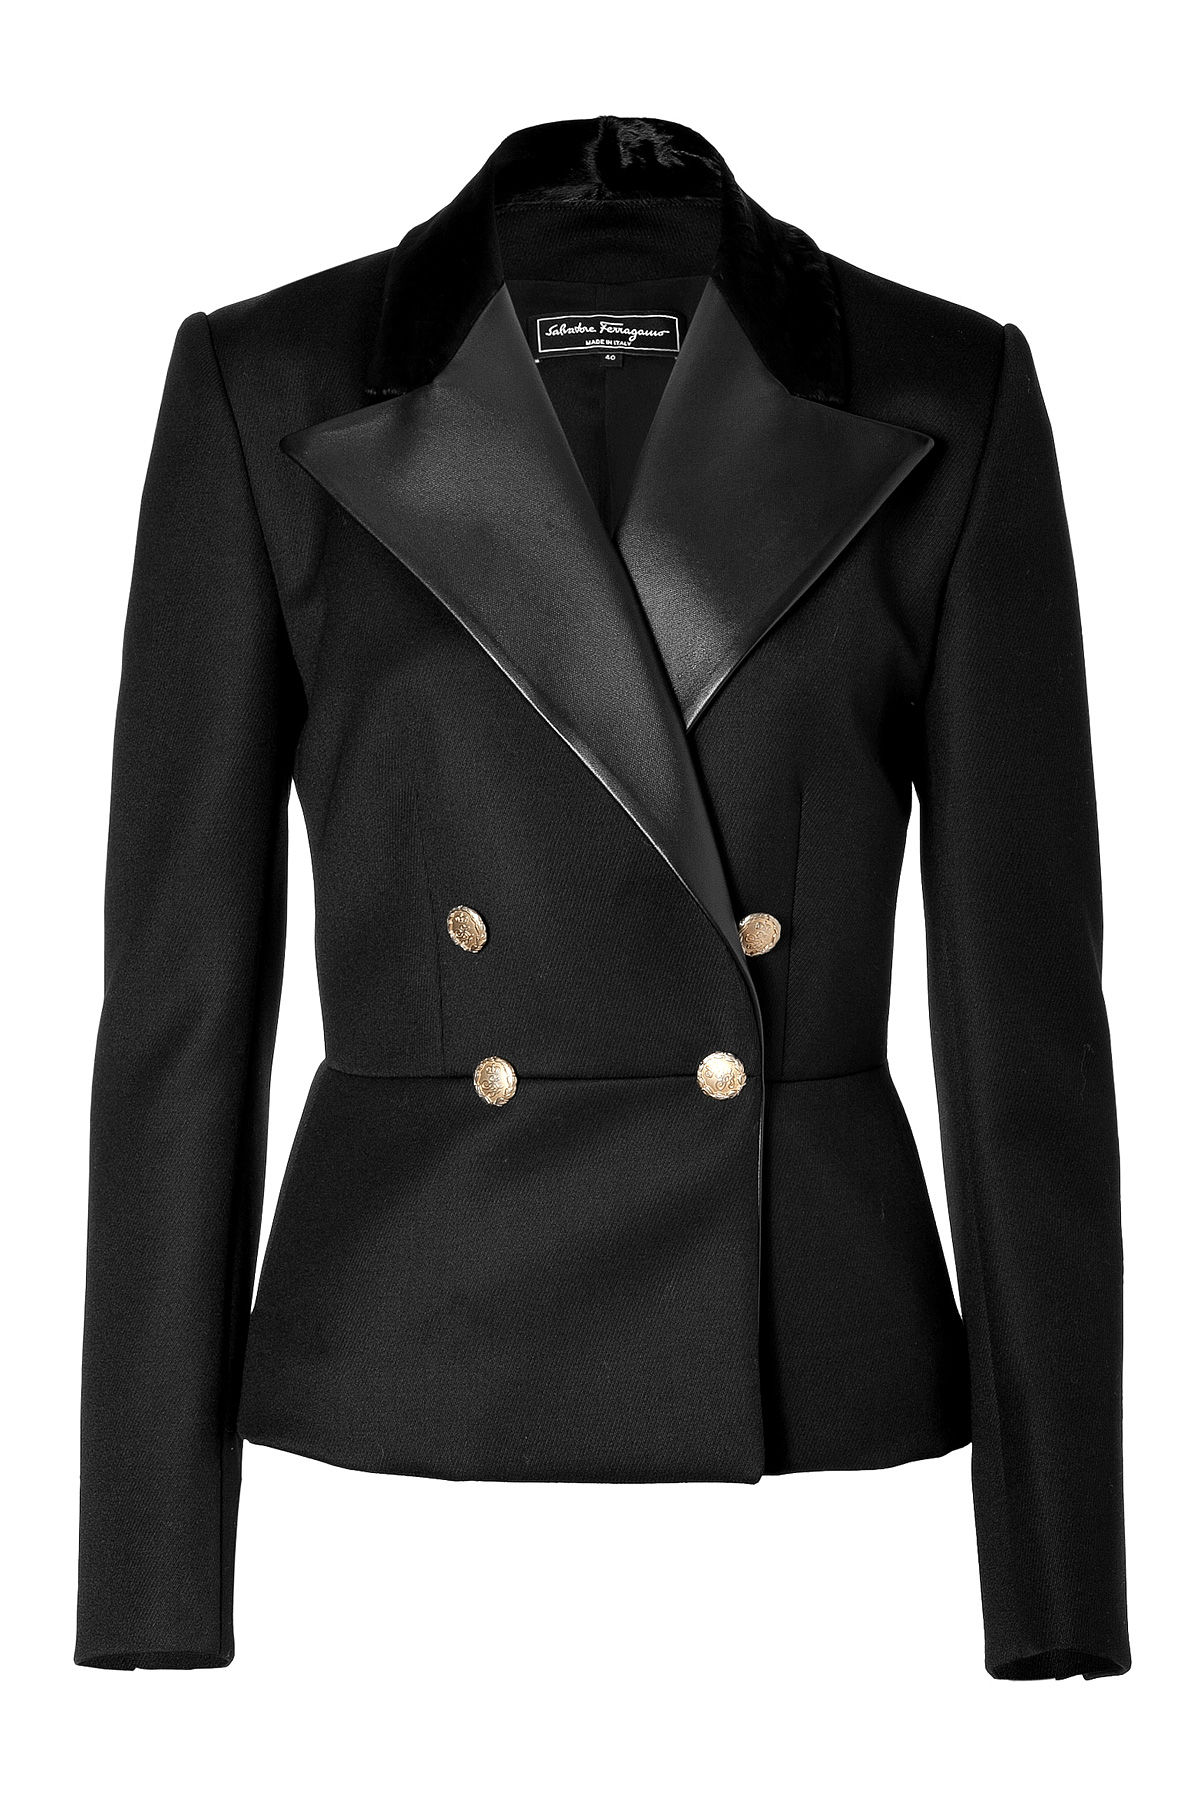 Lyst - Ferragamo Wool Jacket with Fur Leather Lapels in Black